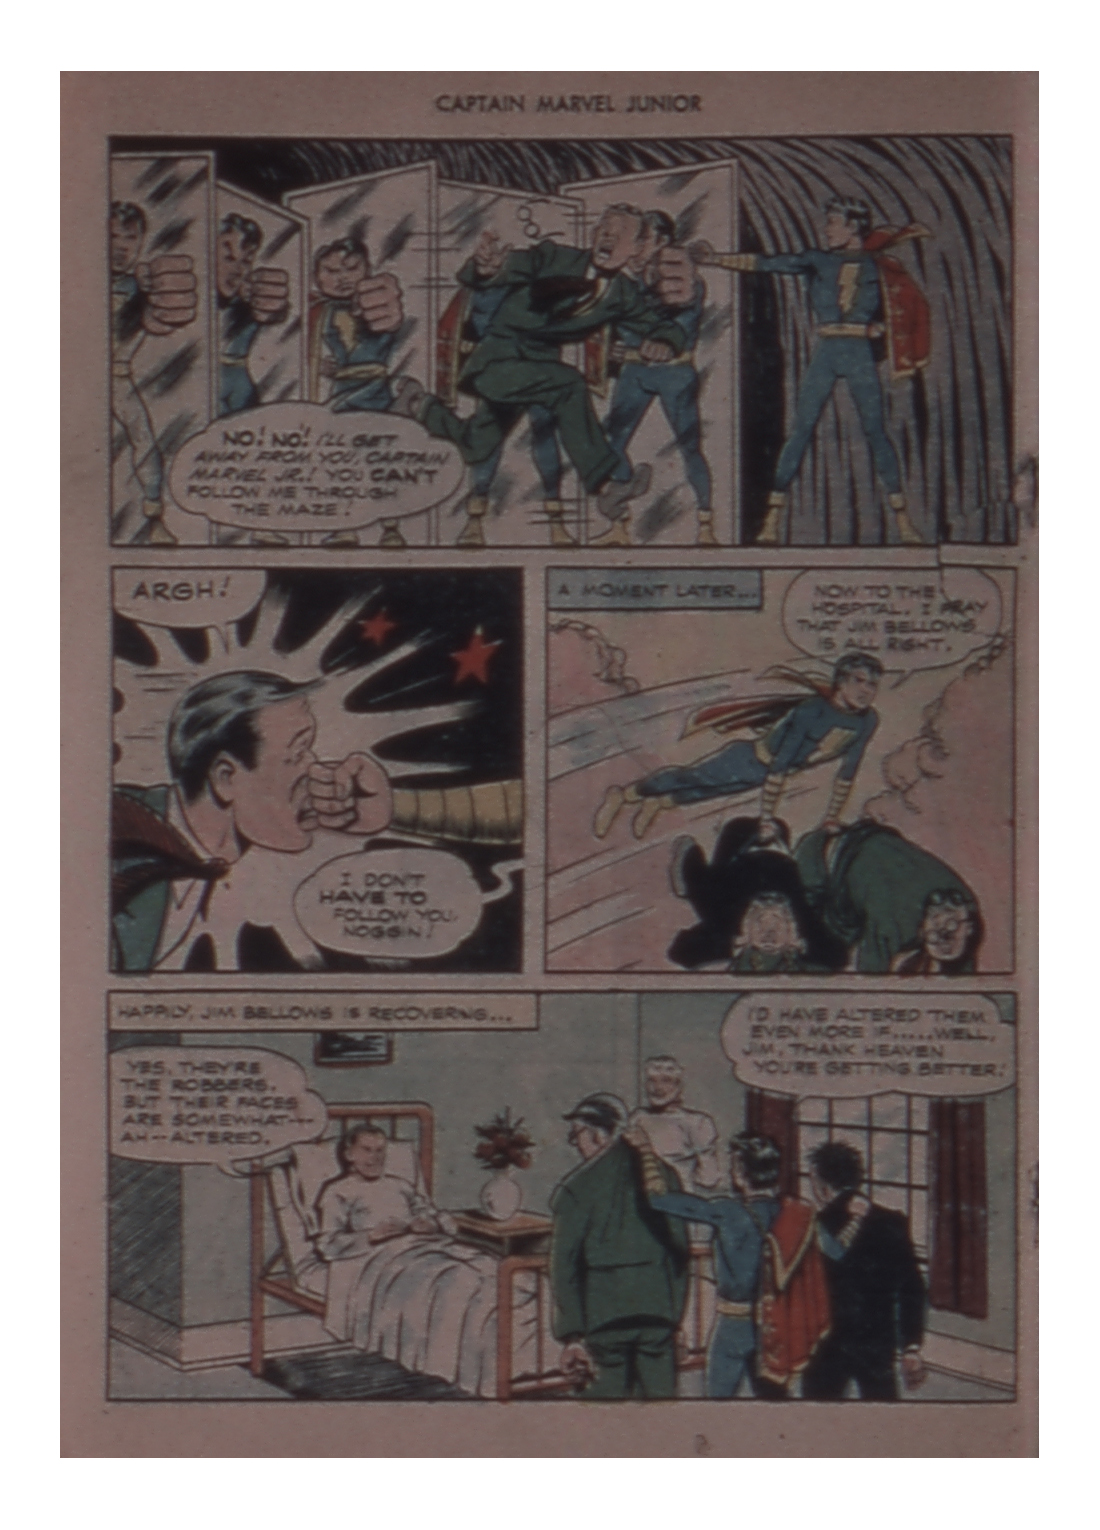 Read online Captain Marvel, Jr. comic -  Issue #58 - 32